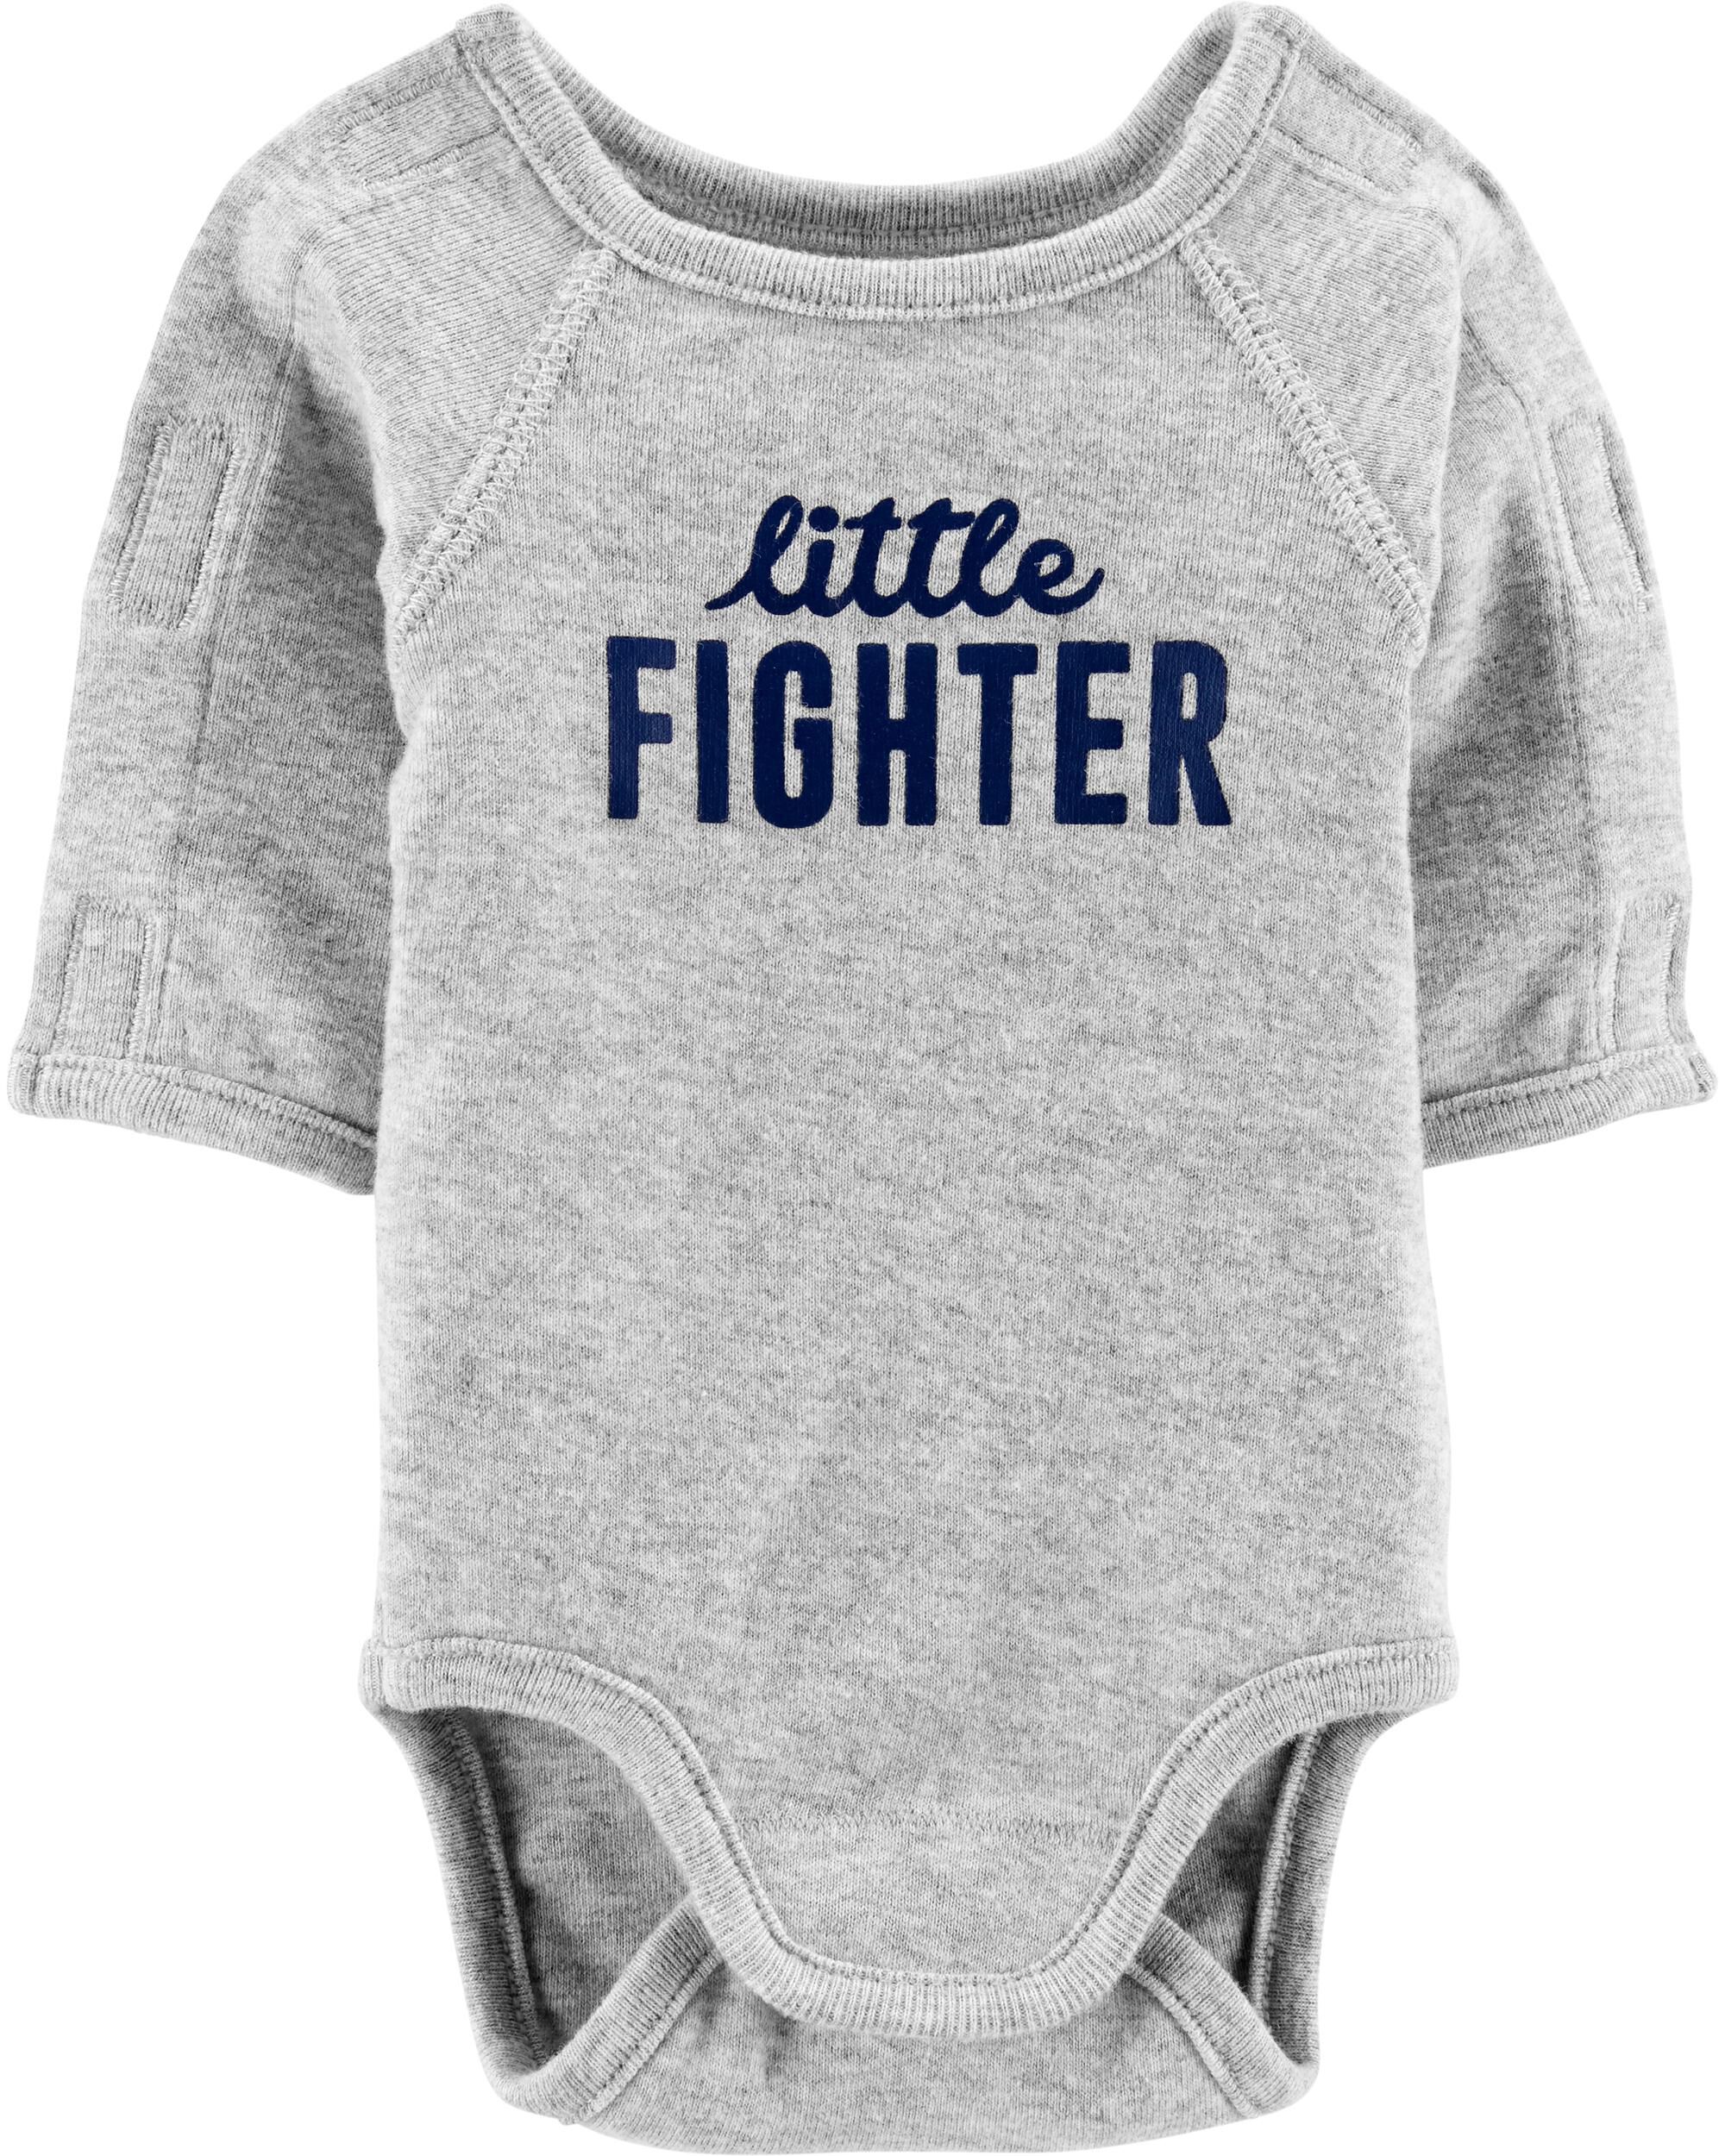 Carters Preemie Little Fighter Bodysuit